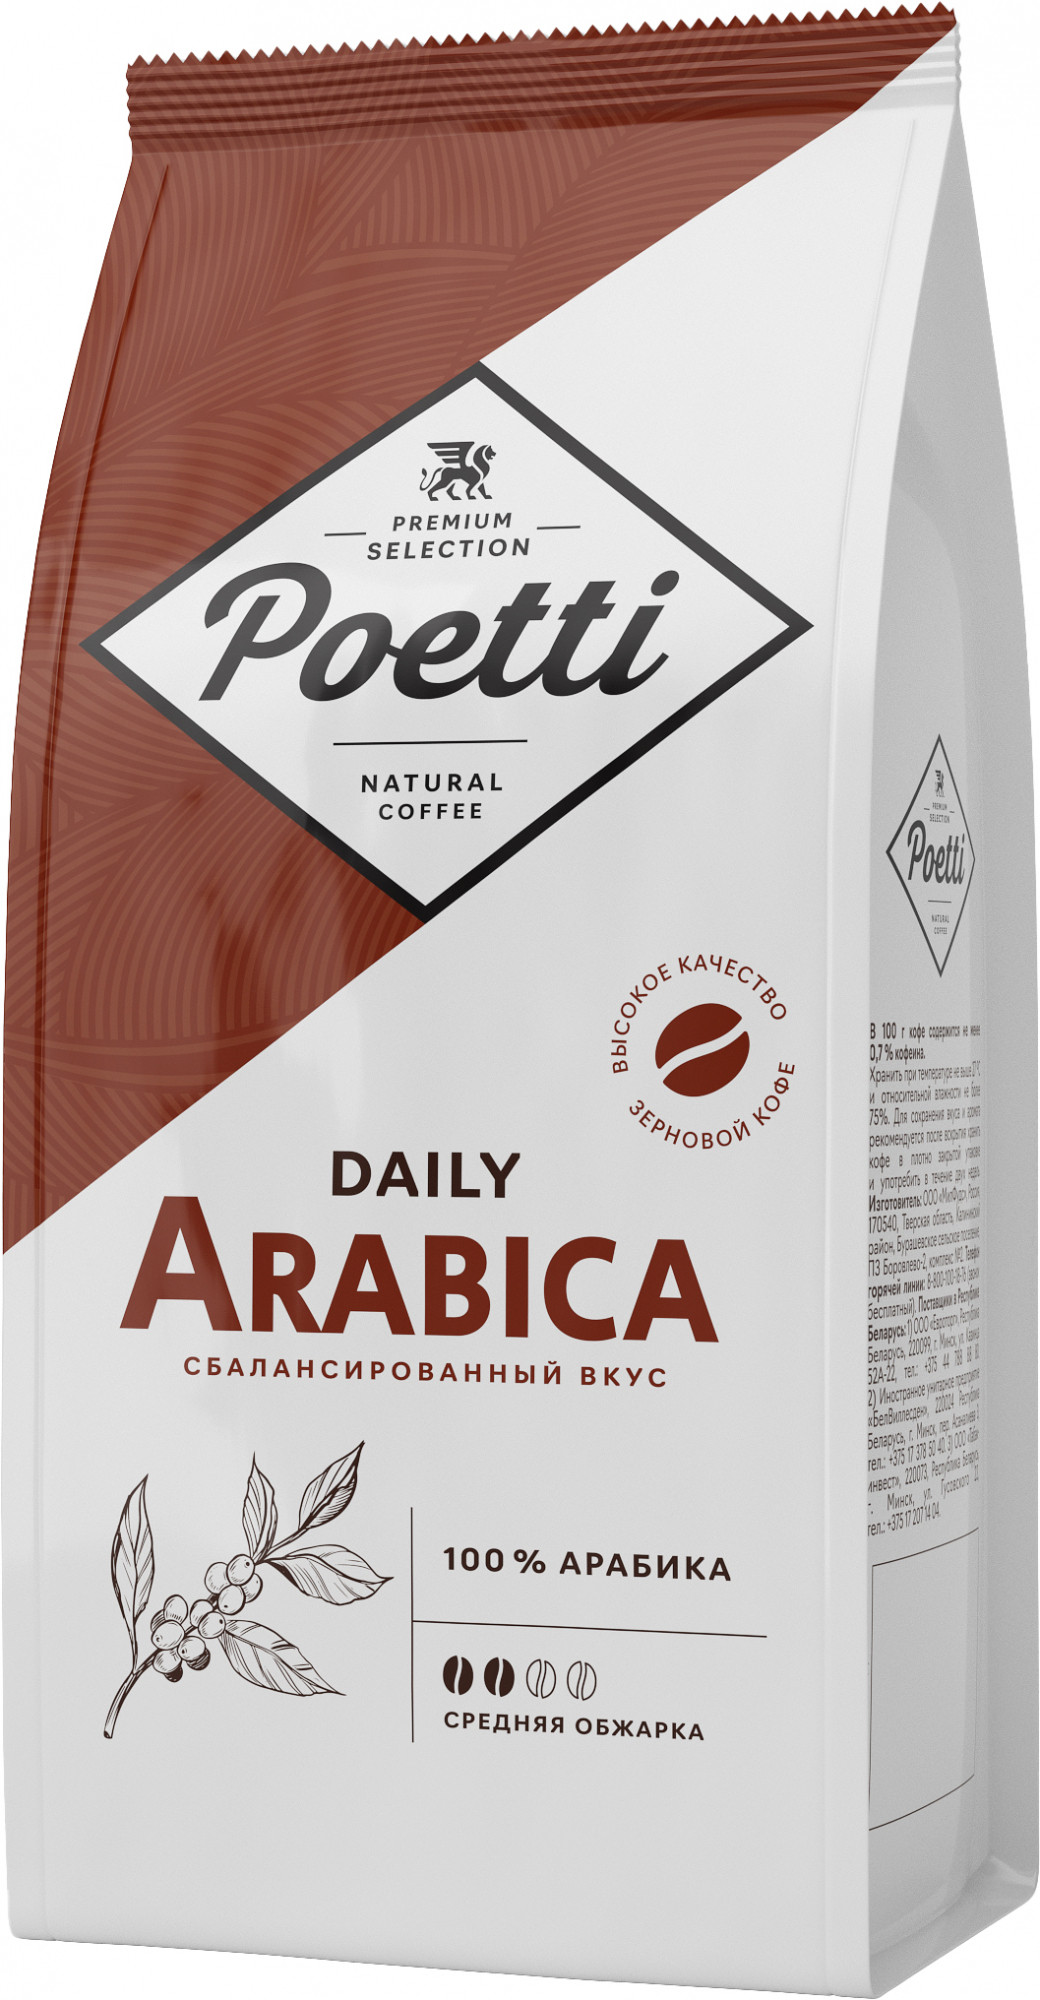 

Кофе Poetti Daily Arabica зерновой 250 г